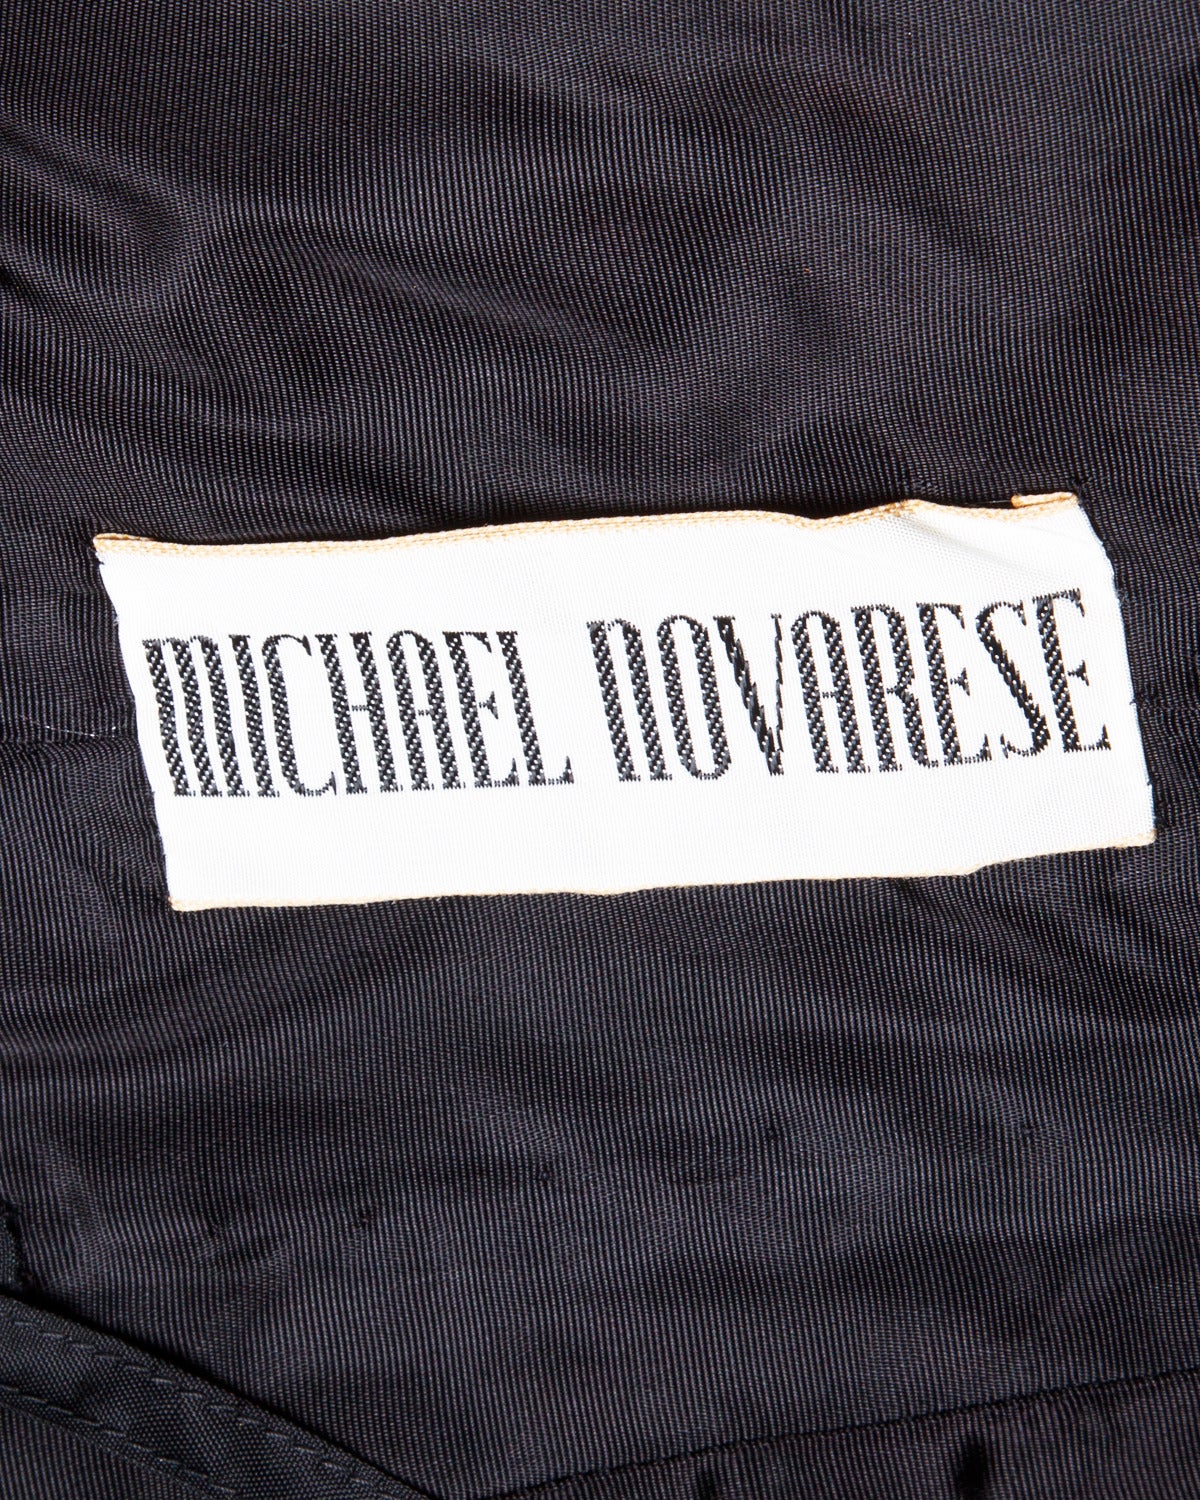 Michael Novarese Vintage 1980s 80s Colorful Silk Print Sheath Dress For Sale 2